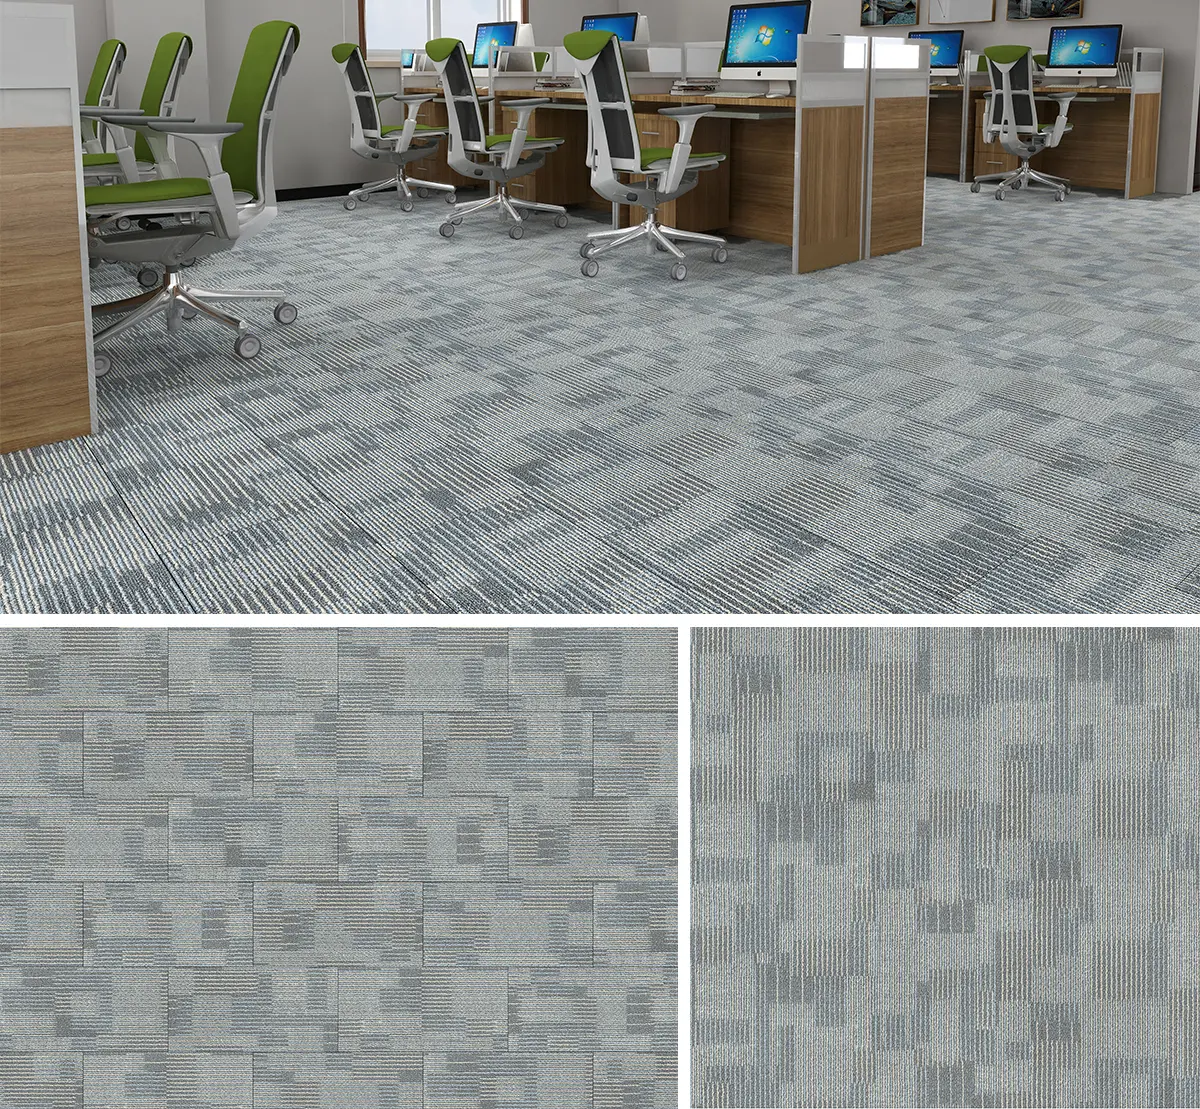  LVT carpet floor Application